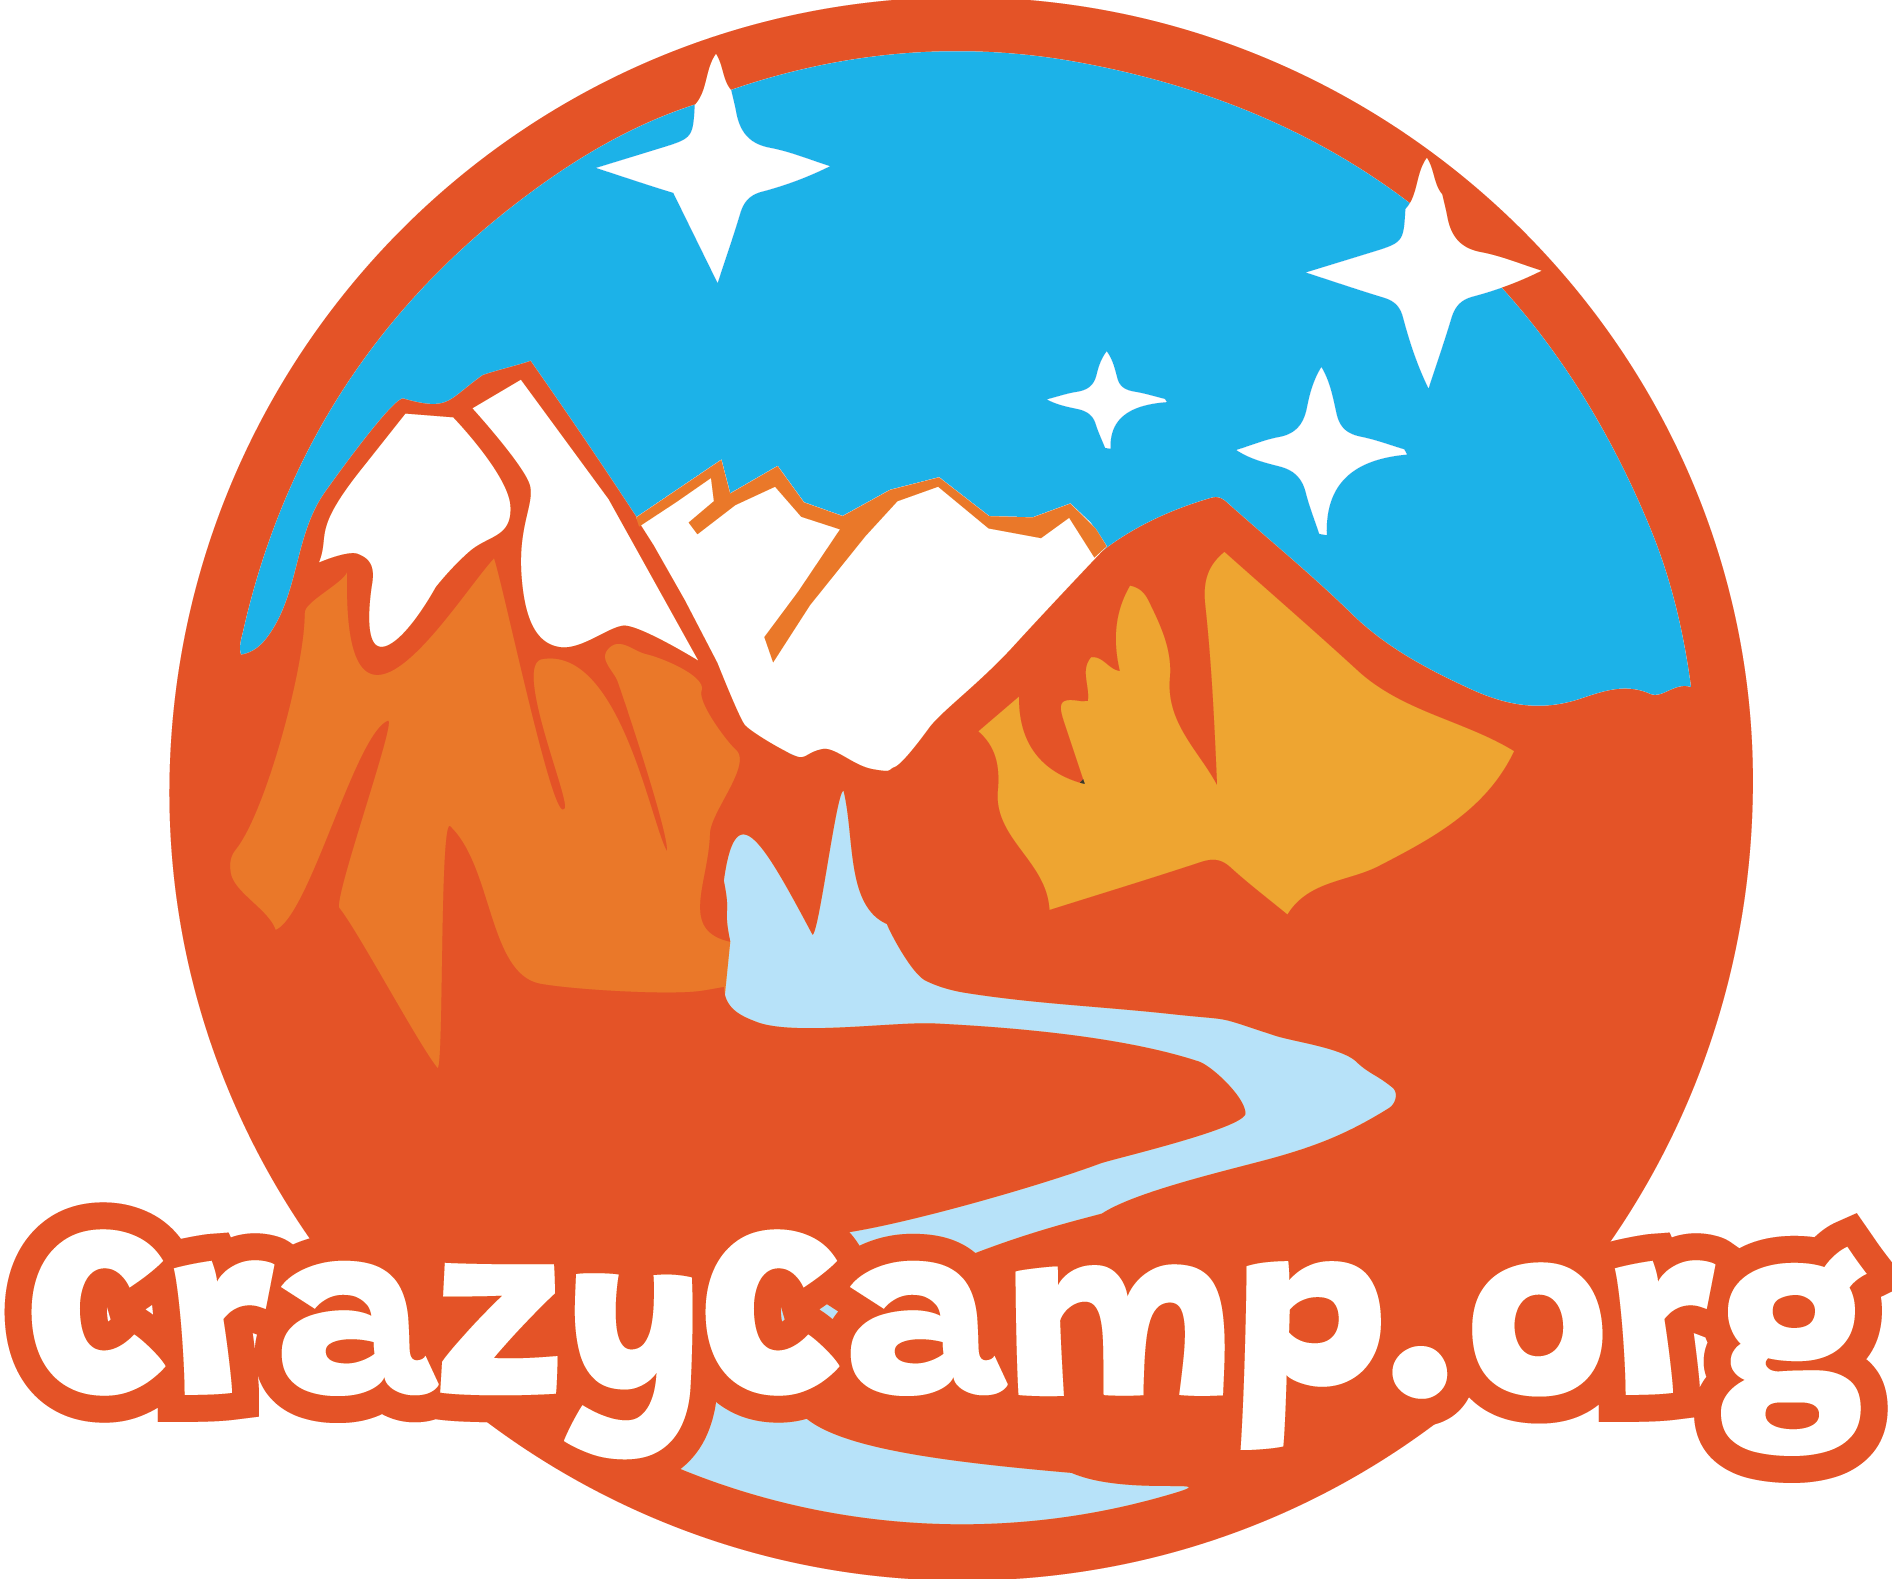 CrazyCamp.org